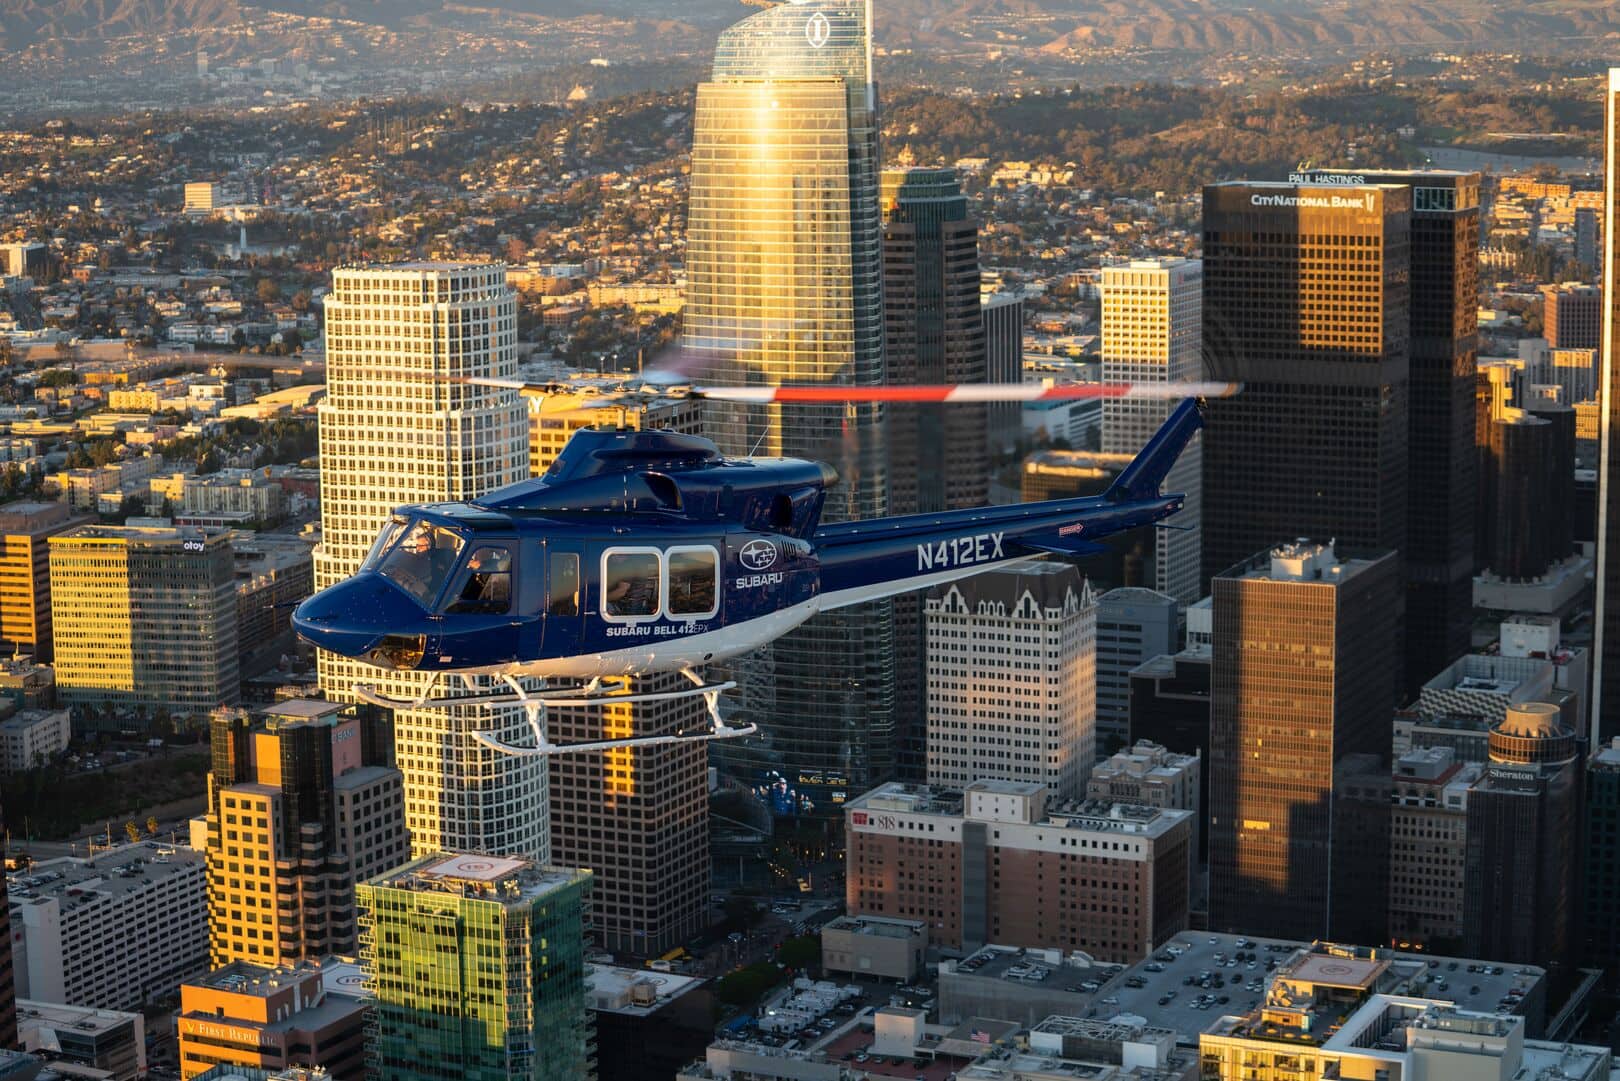 Présentation-Subaru-Bell 412 EPX Los Angeles 31